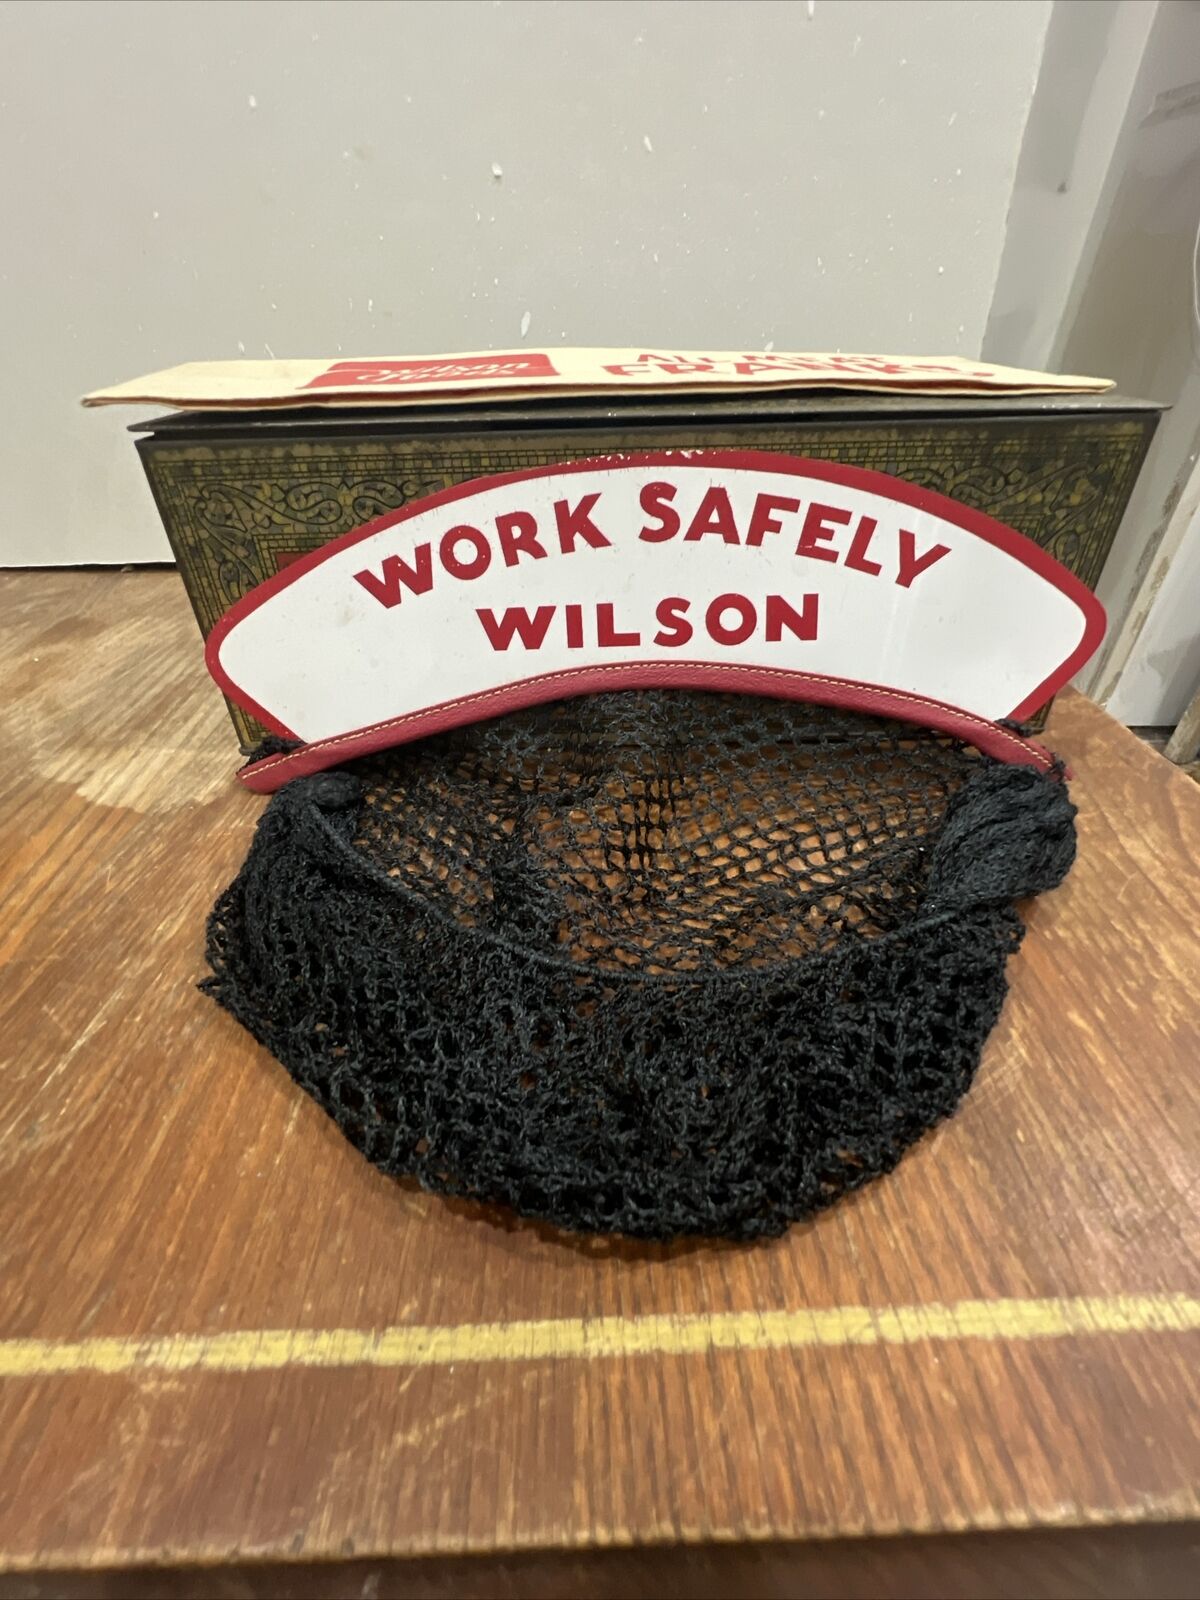 Wilson Foods, Work Safely Fishnet Hat